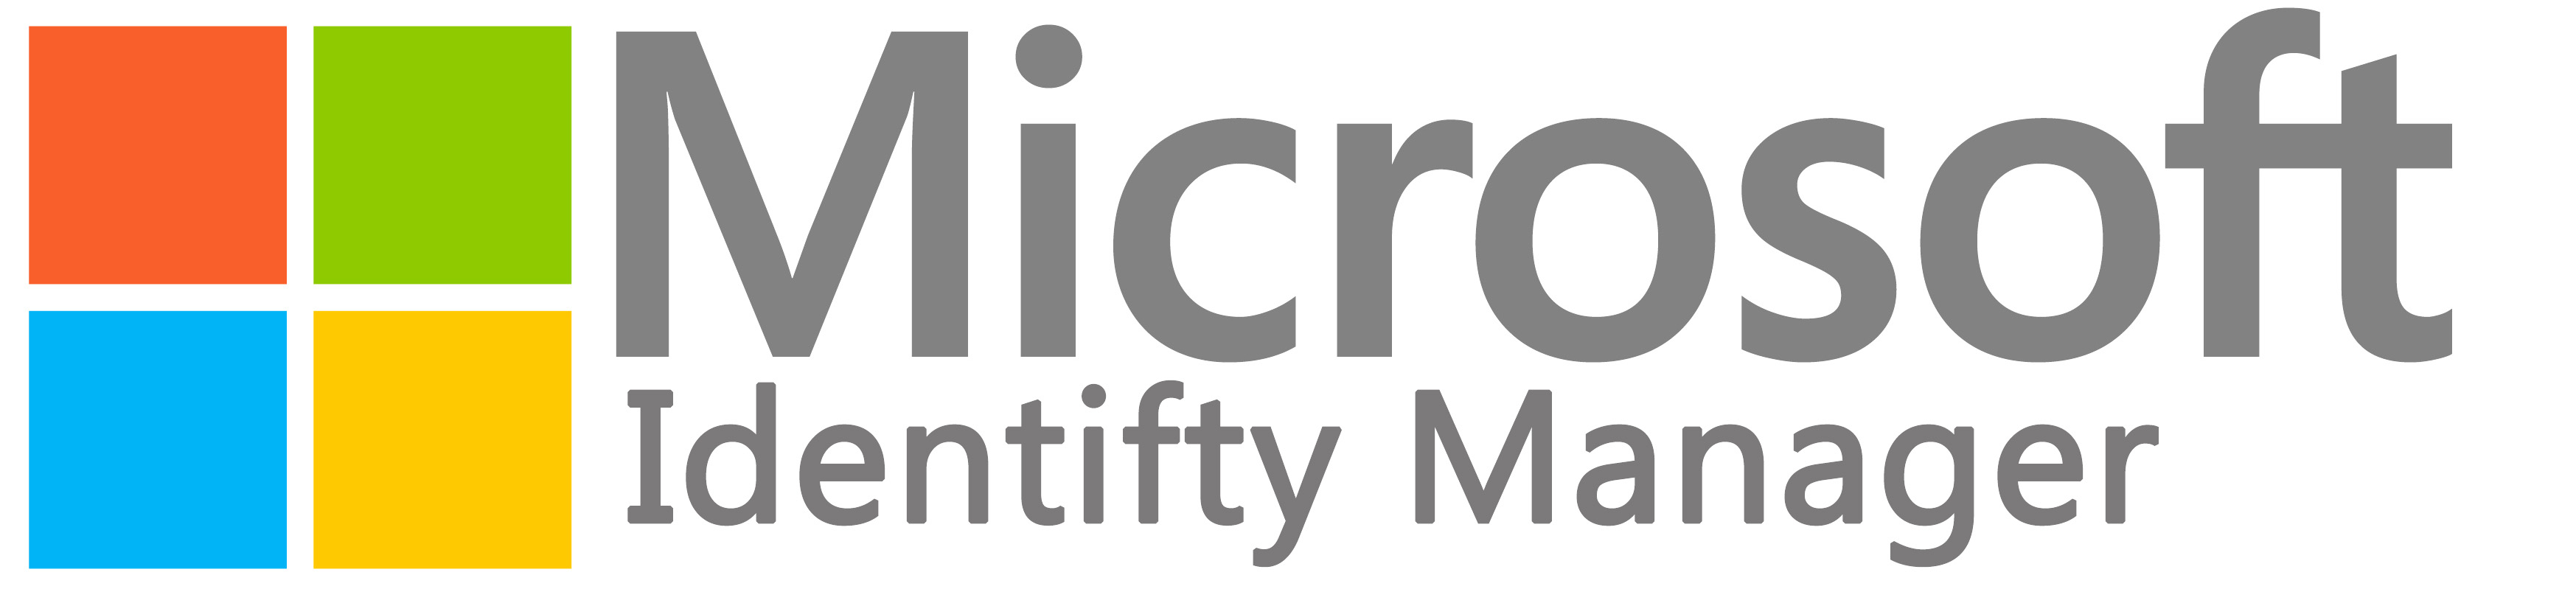 Microsoft Identity. Microsoft Identity Manager cal. Microsoft на покупках. Microsoft Identity Manager logo. Right manager